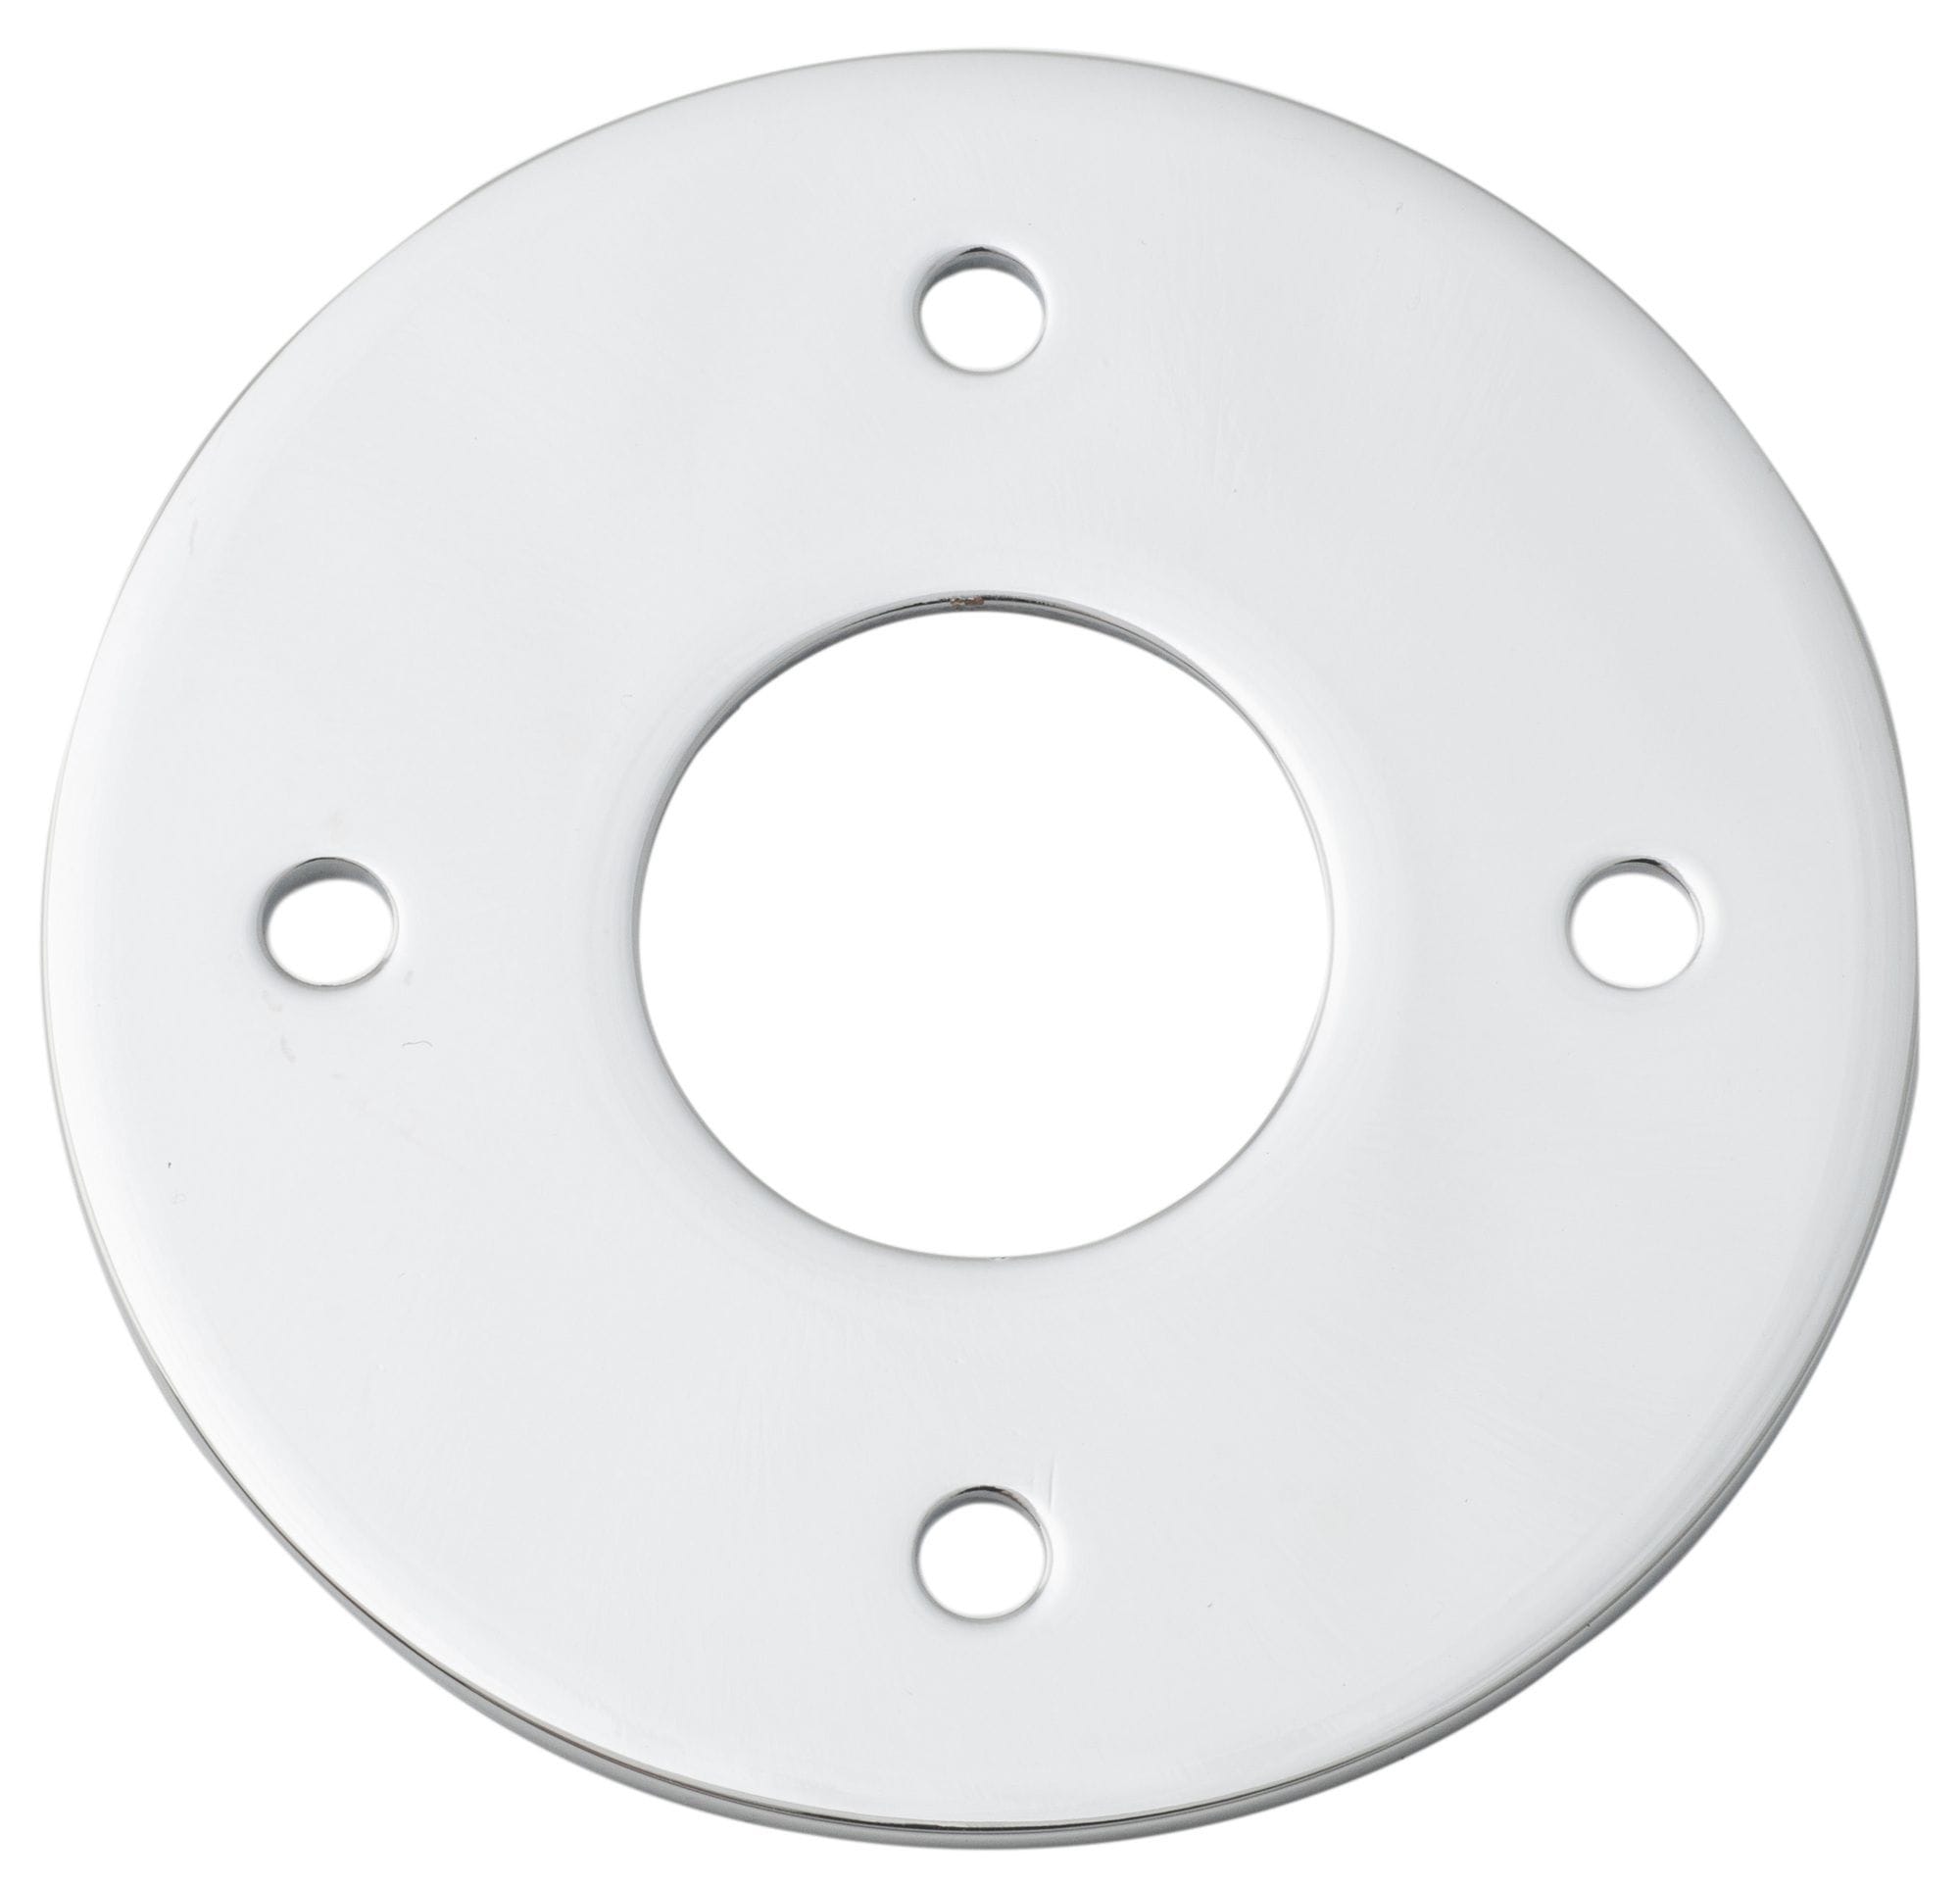 Adaptor Plate (Pair) Round Polished Chrome